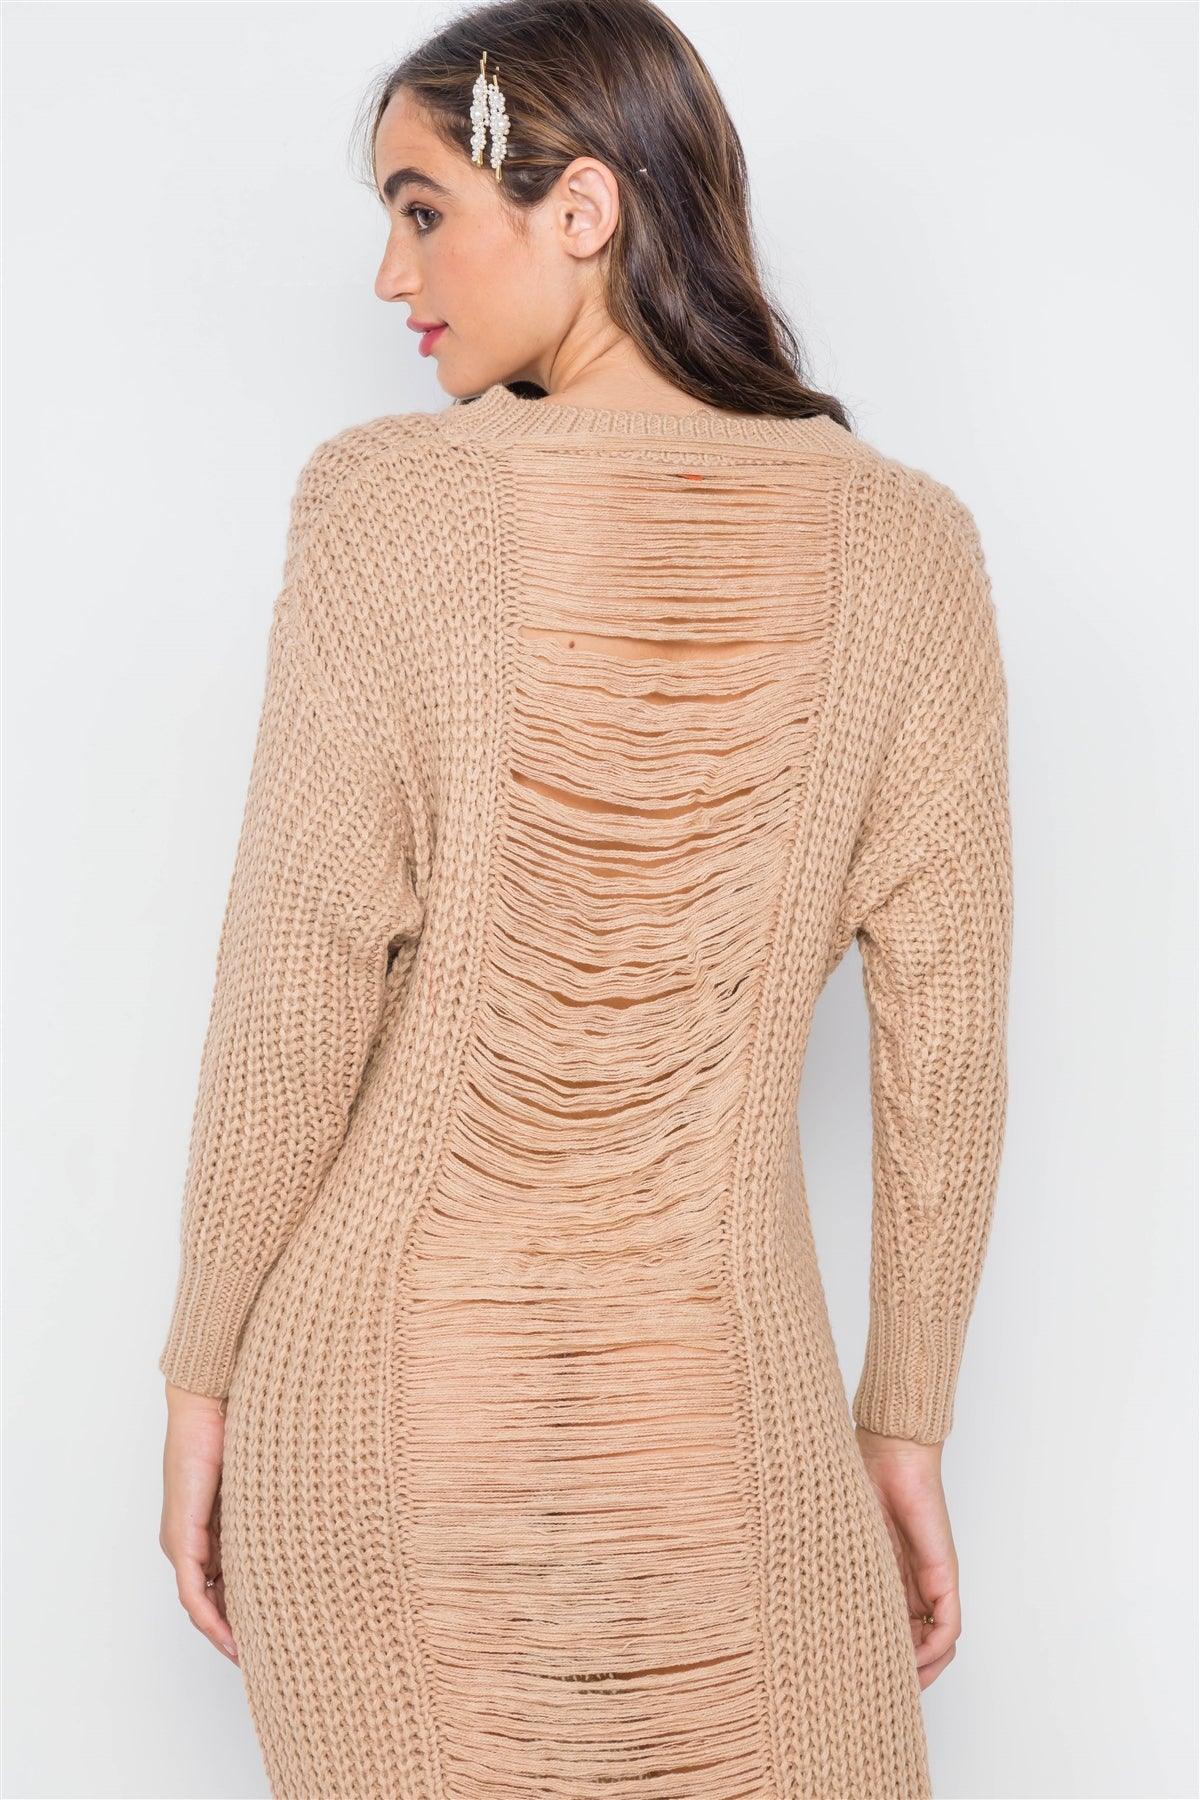 Khaki Chunky Knit Long Sleeve Sweater Dress